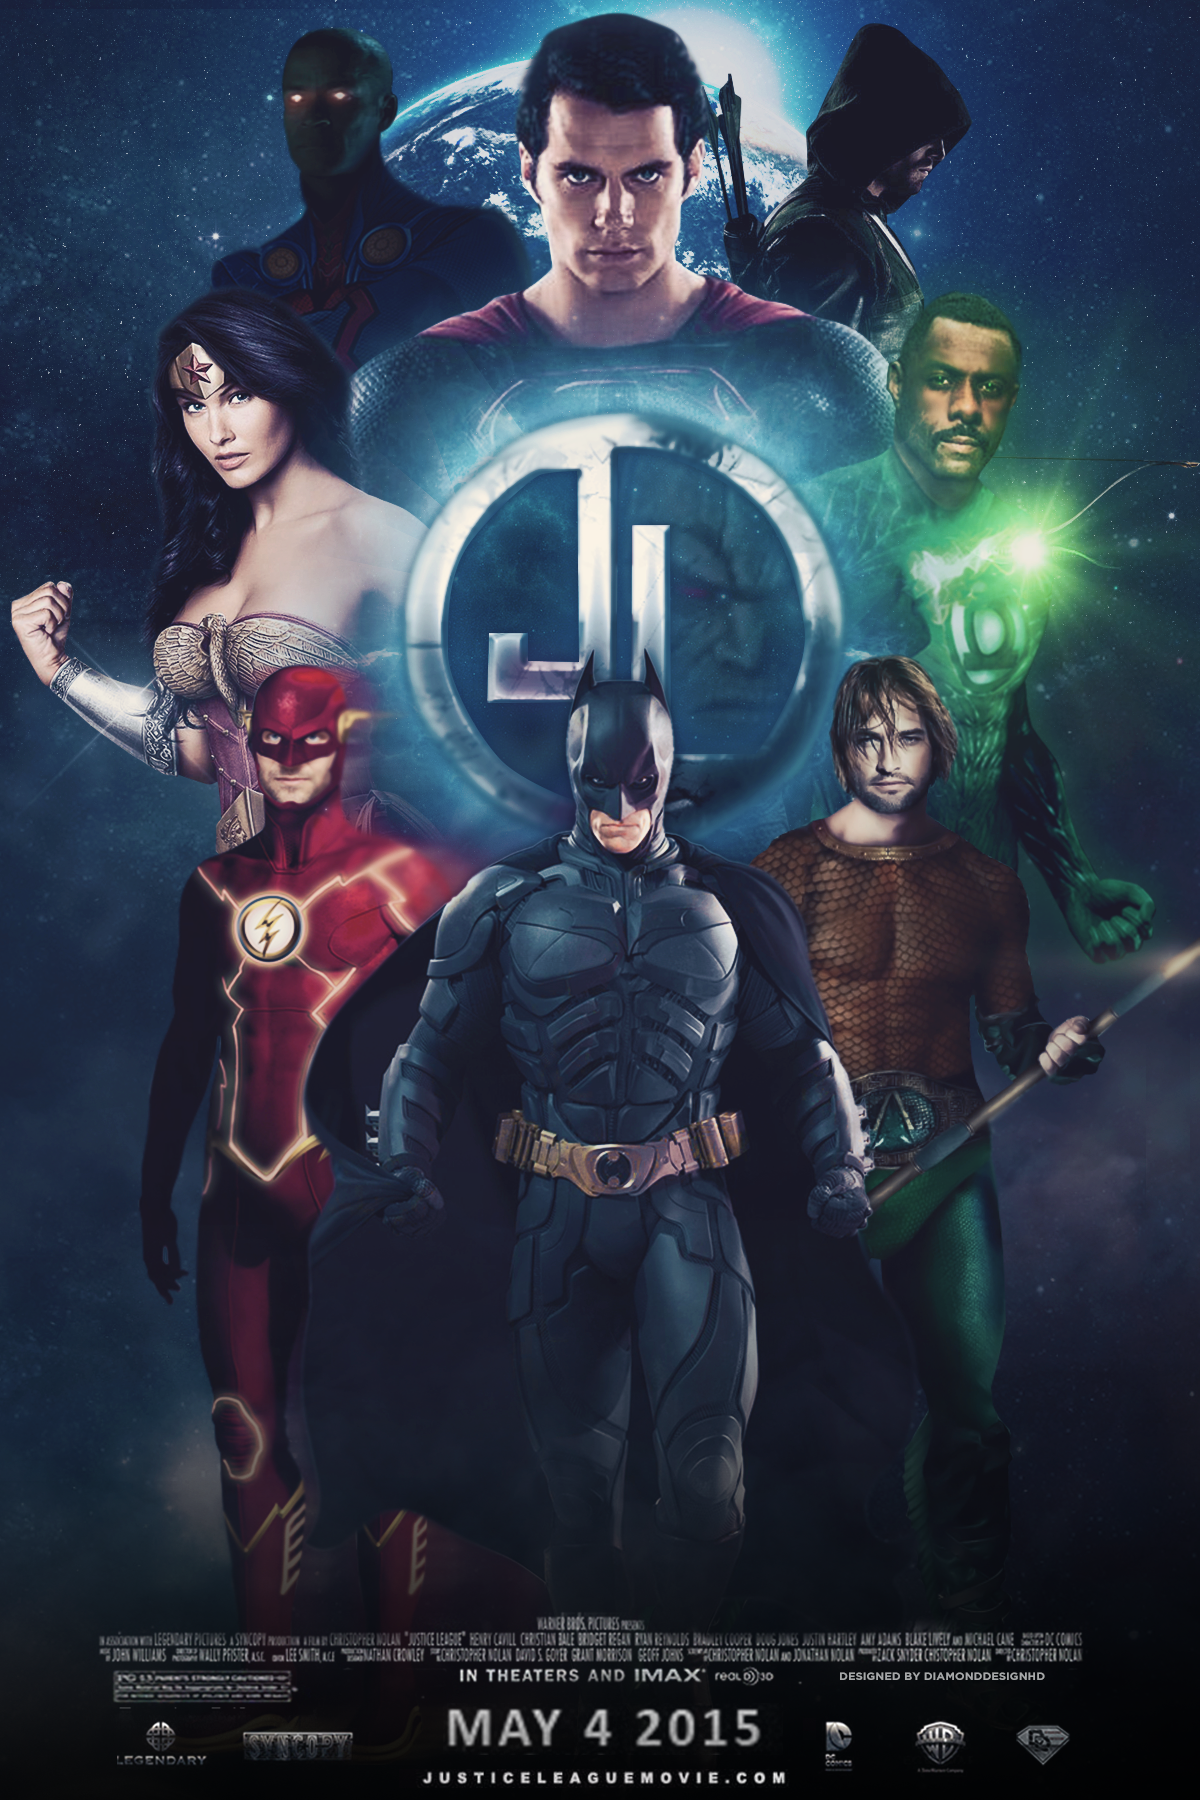 Justice League Poster Fan Art Wallpapers